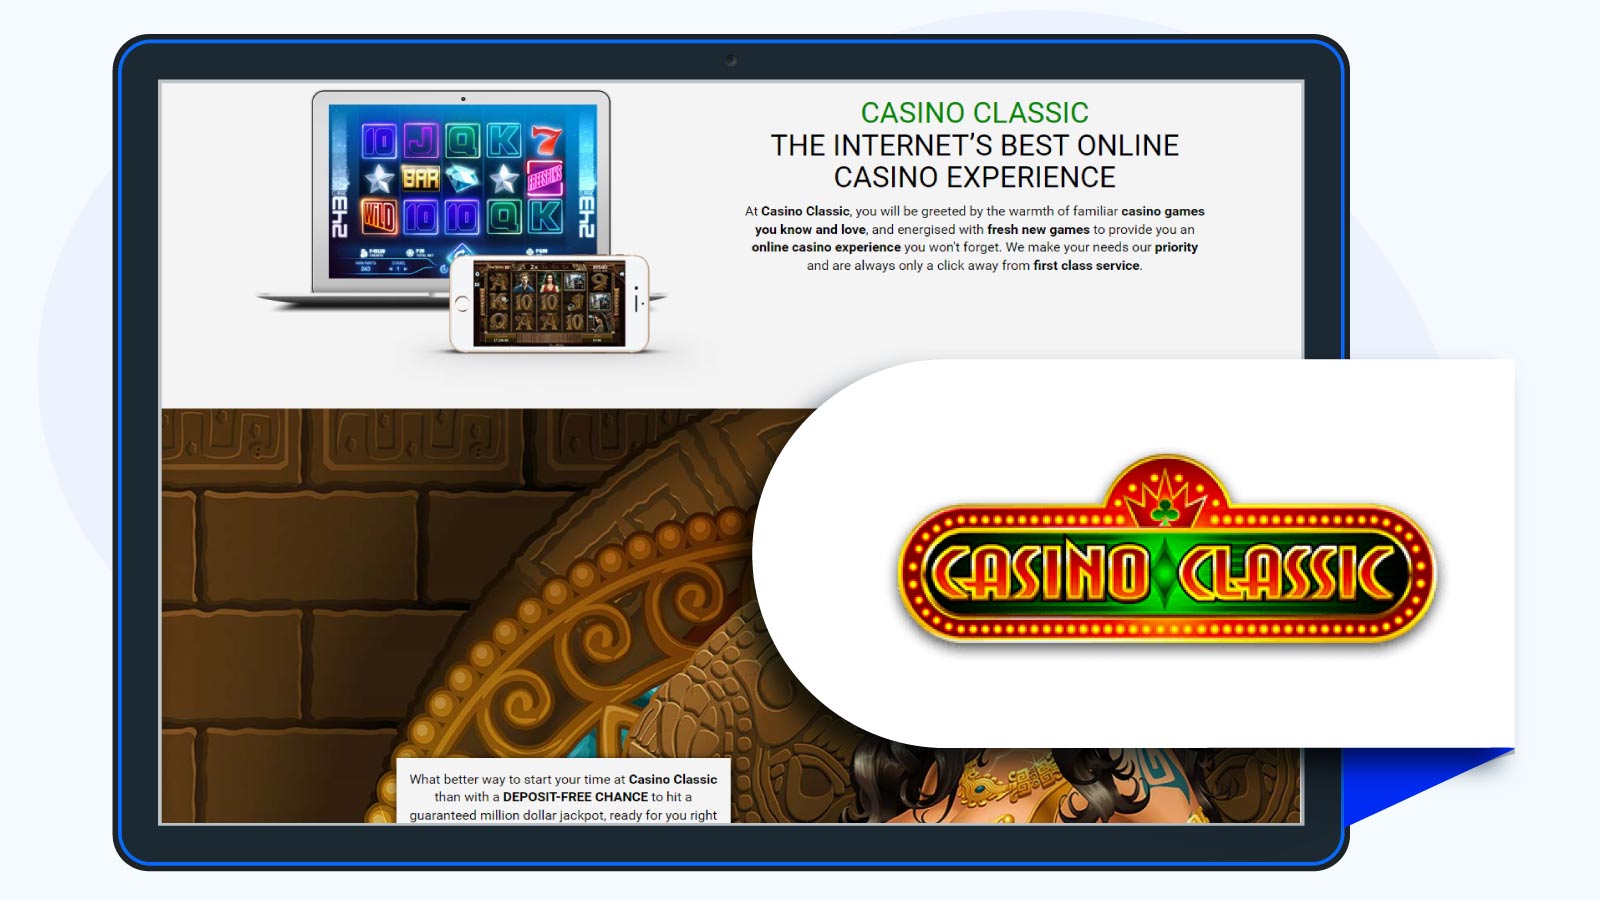 Casino Classic Editor’s Choice